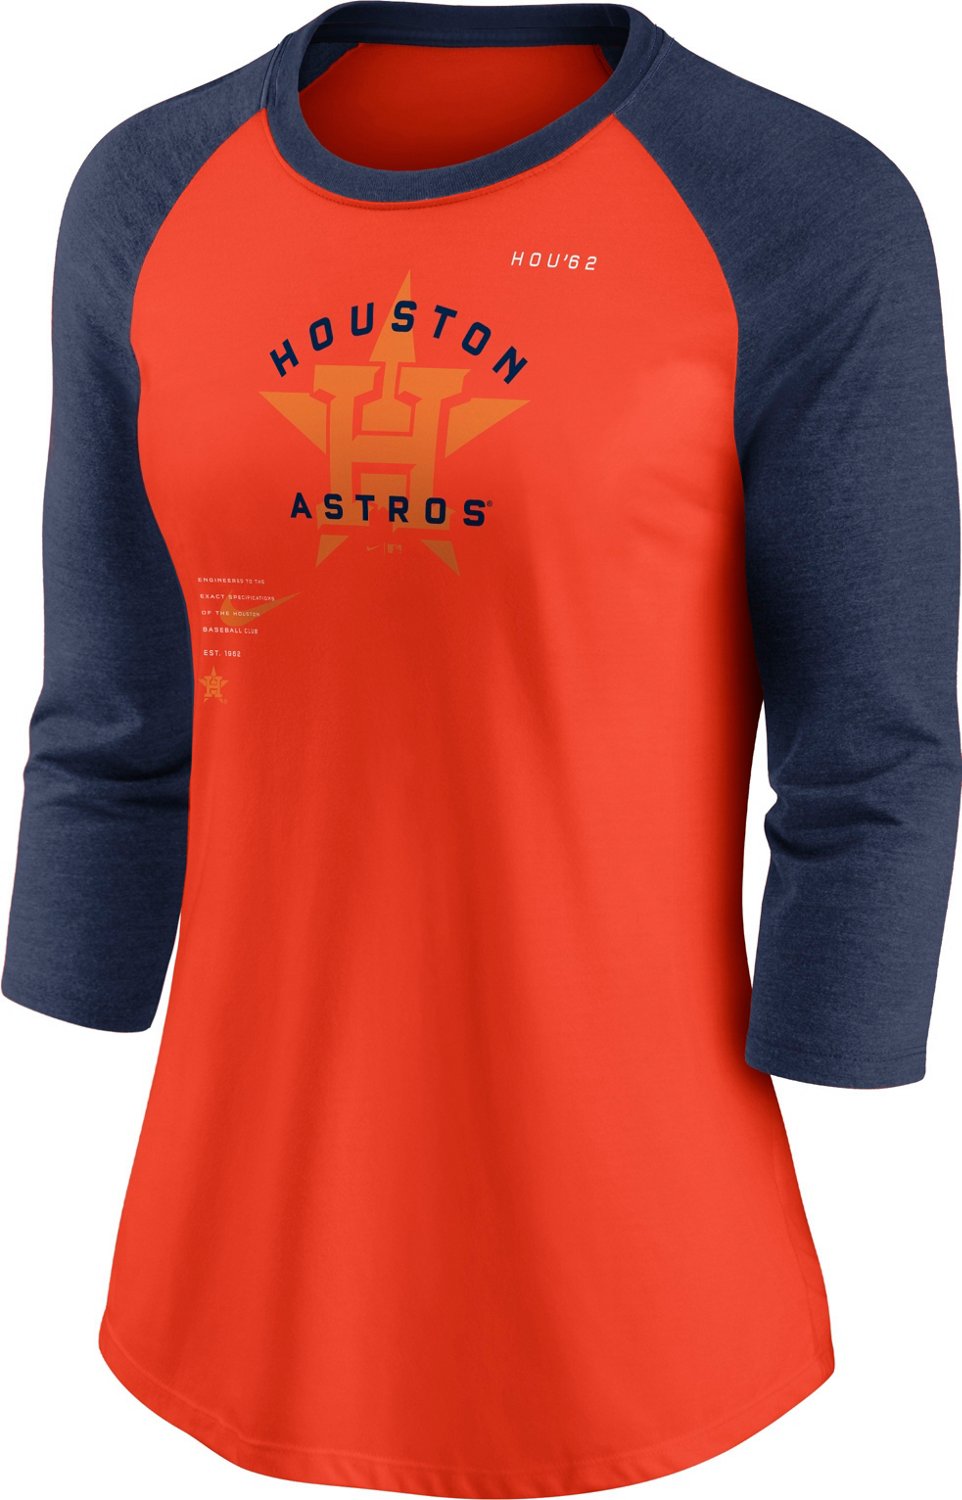 Nike Women's Houston Astros H-Town T-shirt